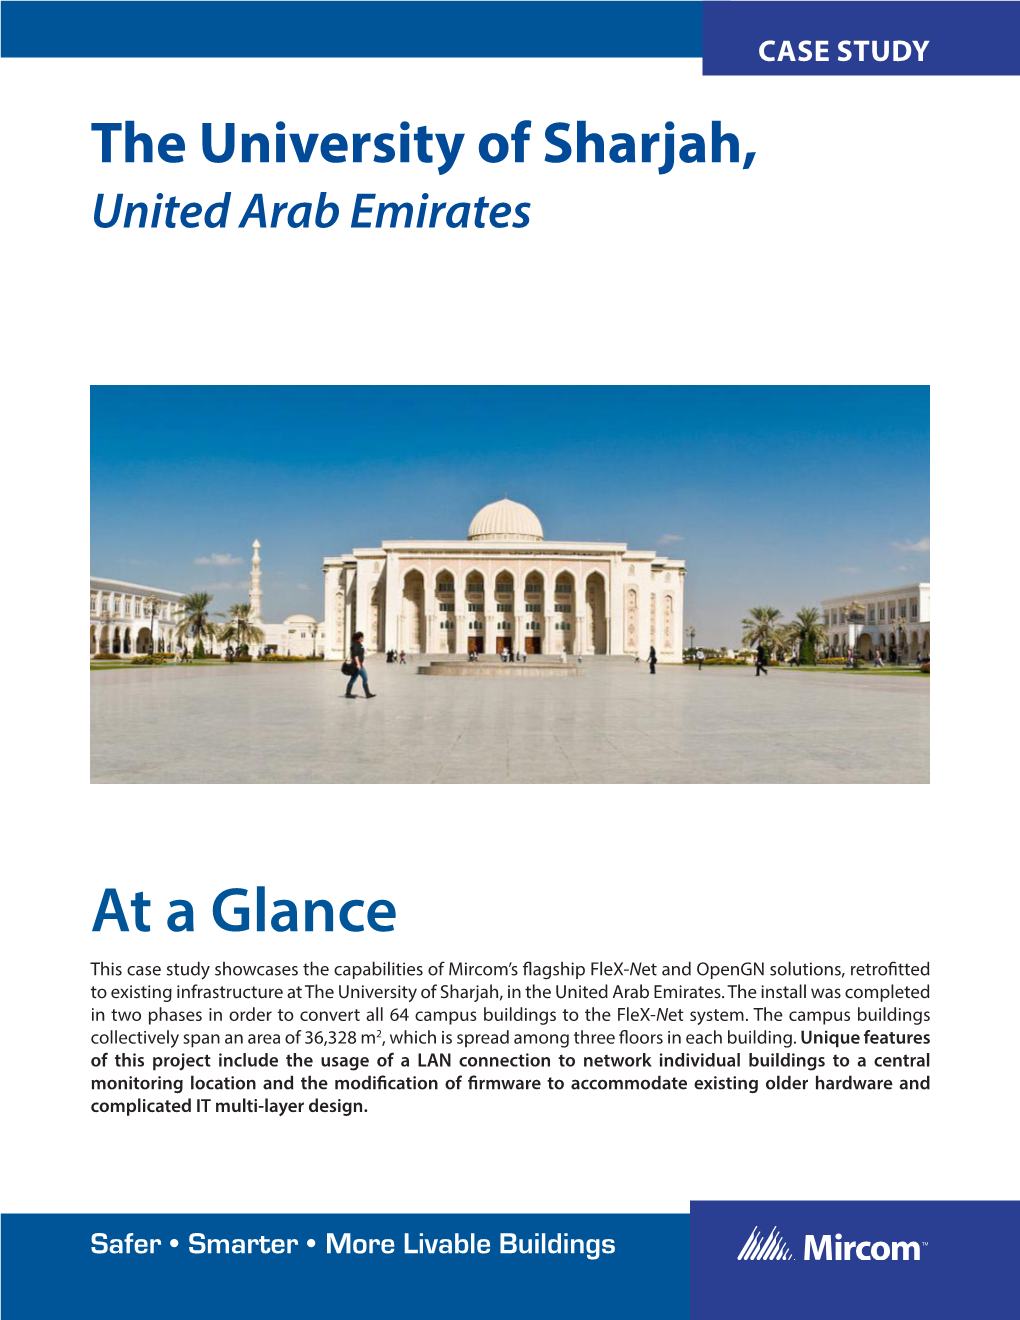 The University of Sharjah, United Arab Emirates